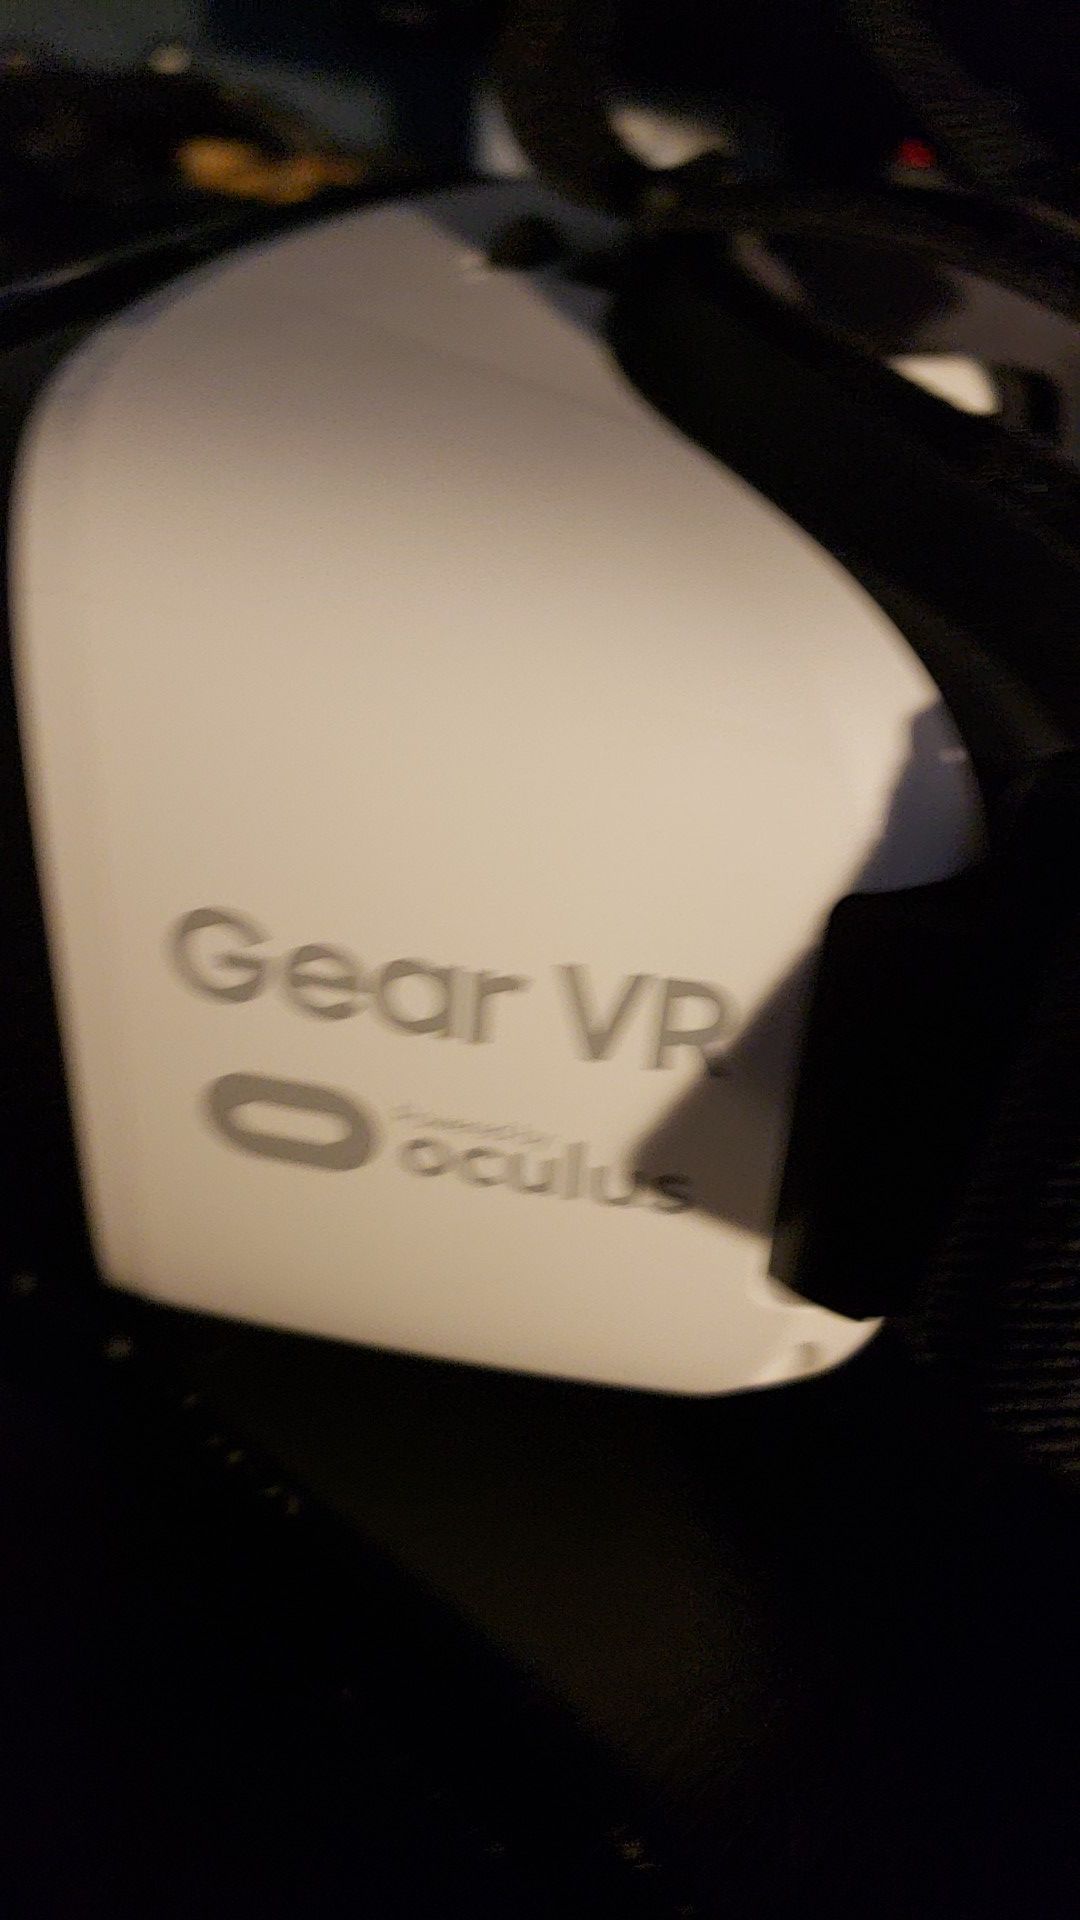 Samsung Oculus Gear VR headset